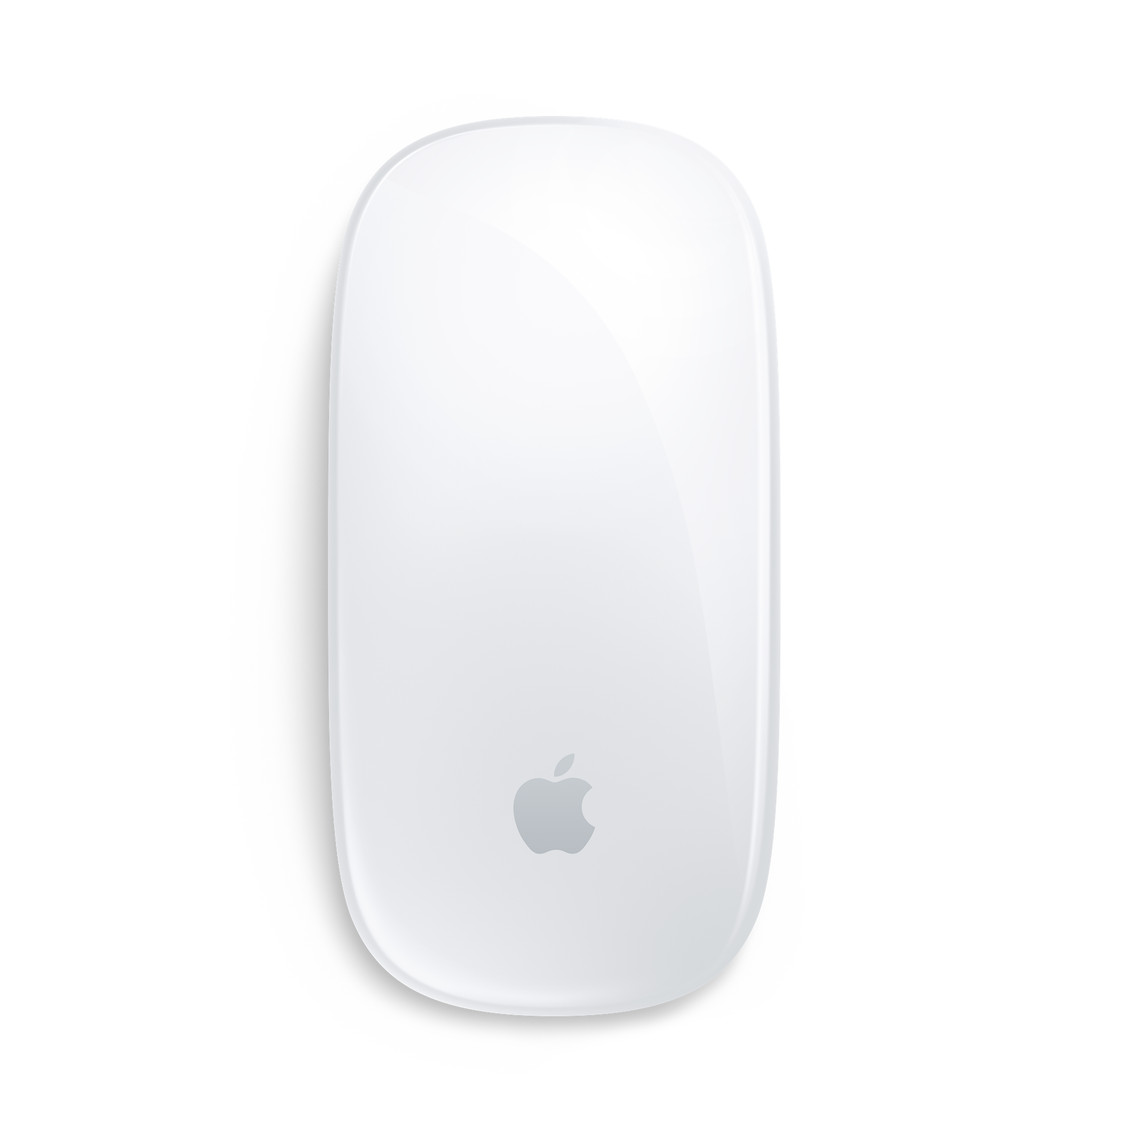 Apple Magic Mouse 2021 White chính hãng Apple tại Goka